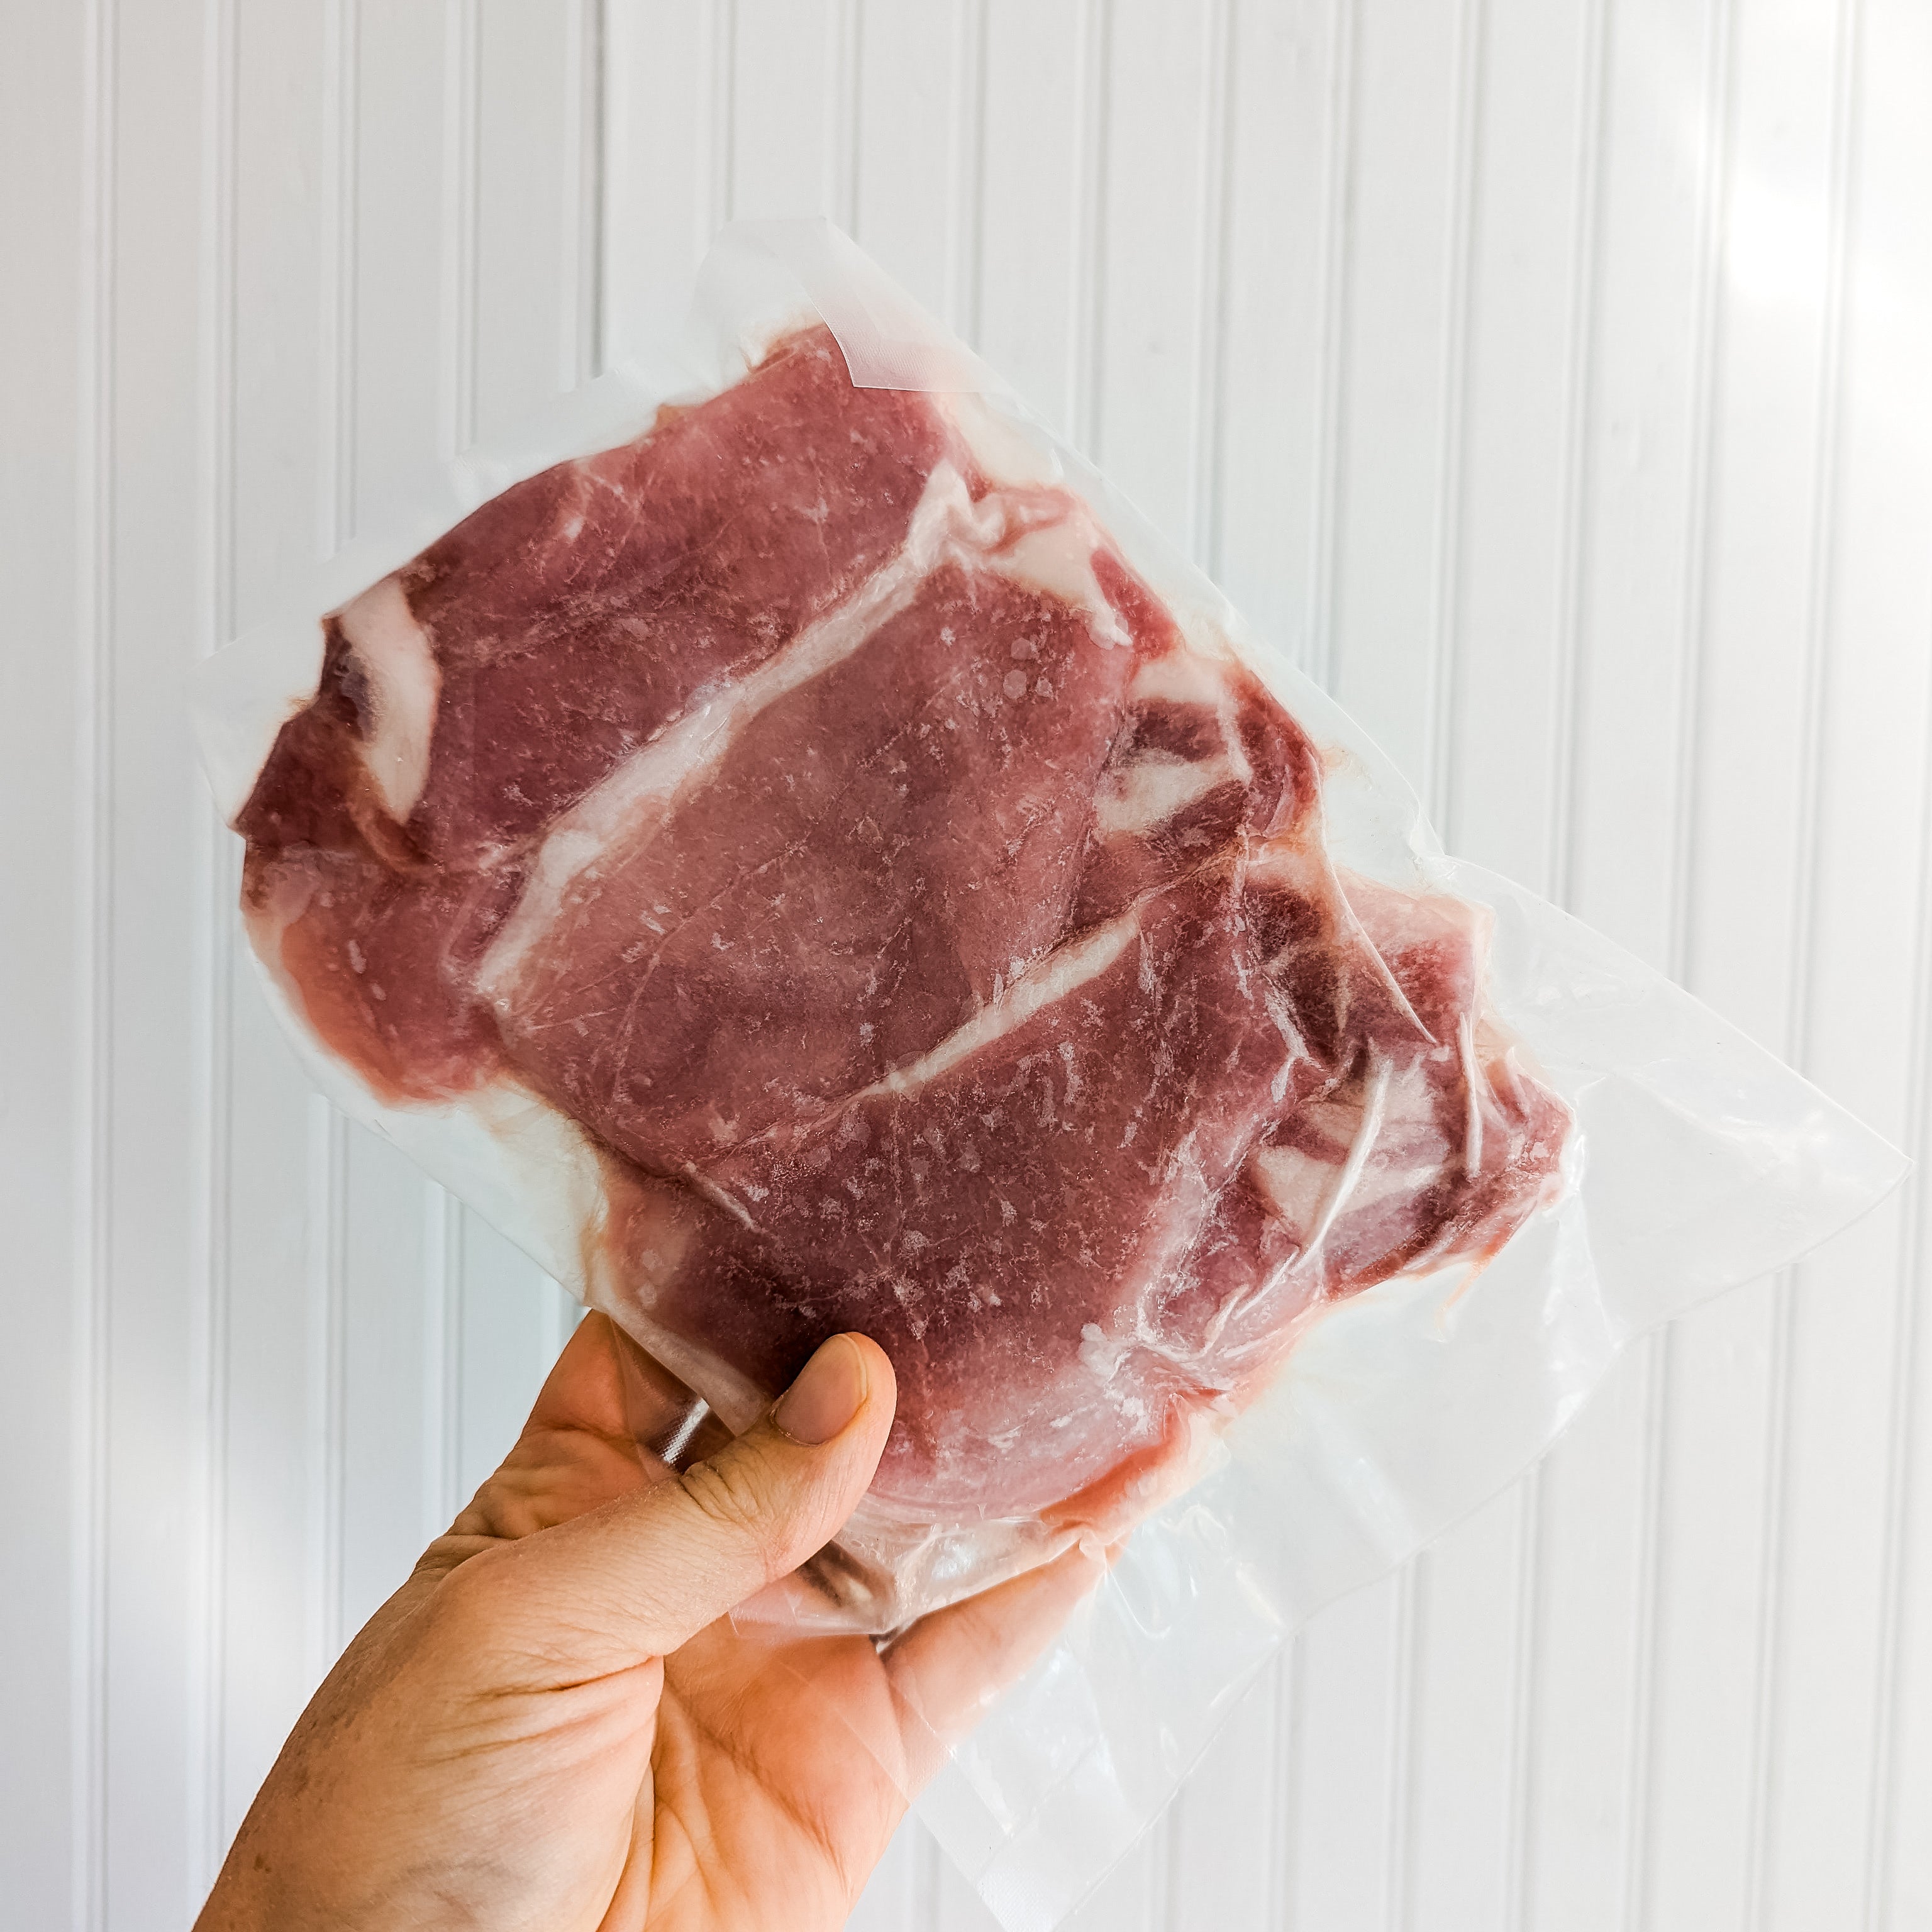 Boneless Pork Chops Thin Cut (6/pkg)